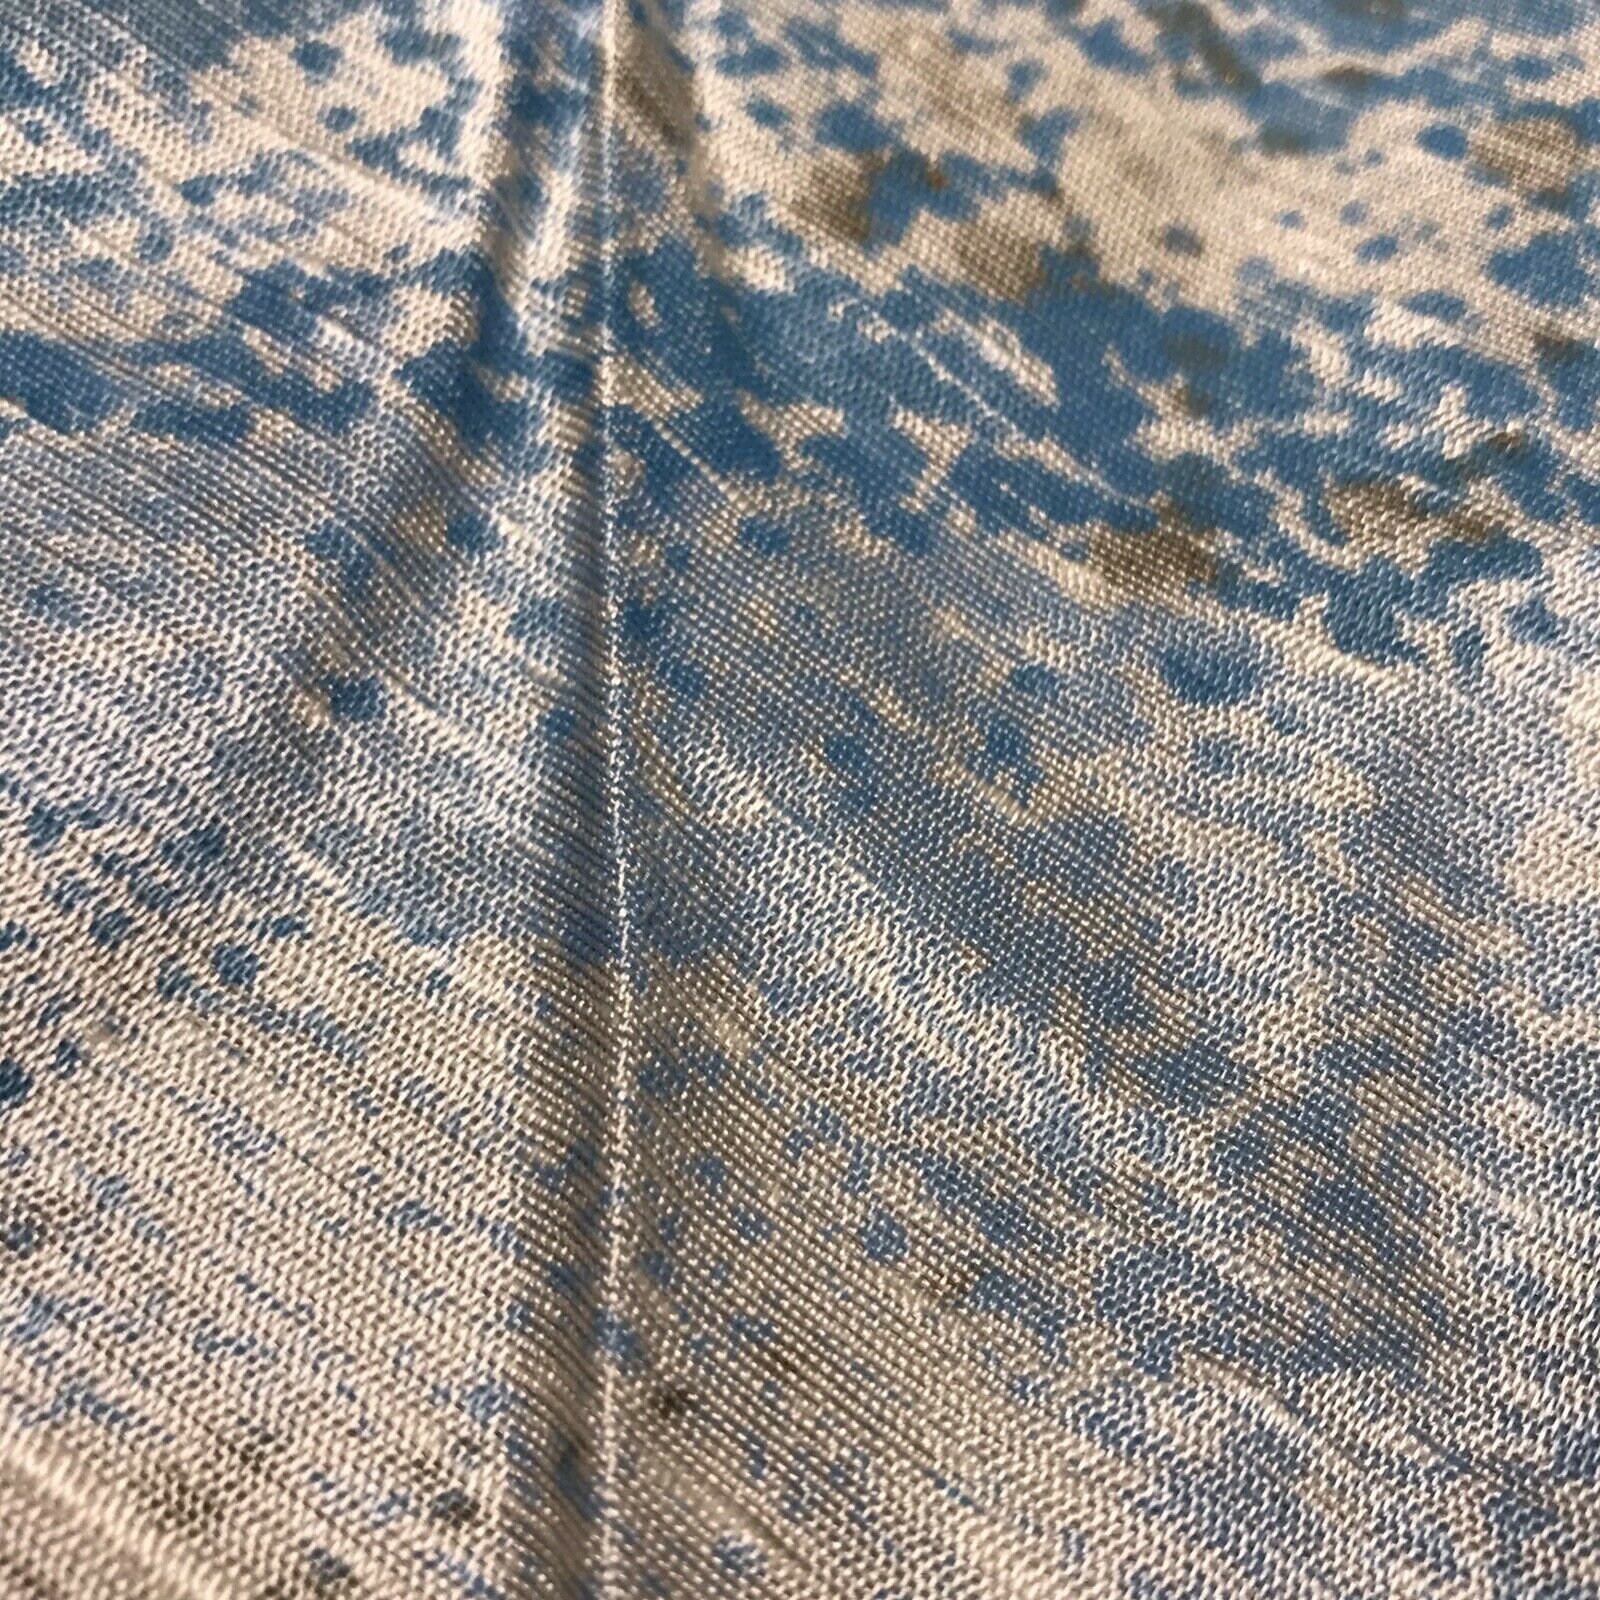 MCM Woven Fabric Material Splatter Blue Green Metallic Gold - Etsy